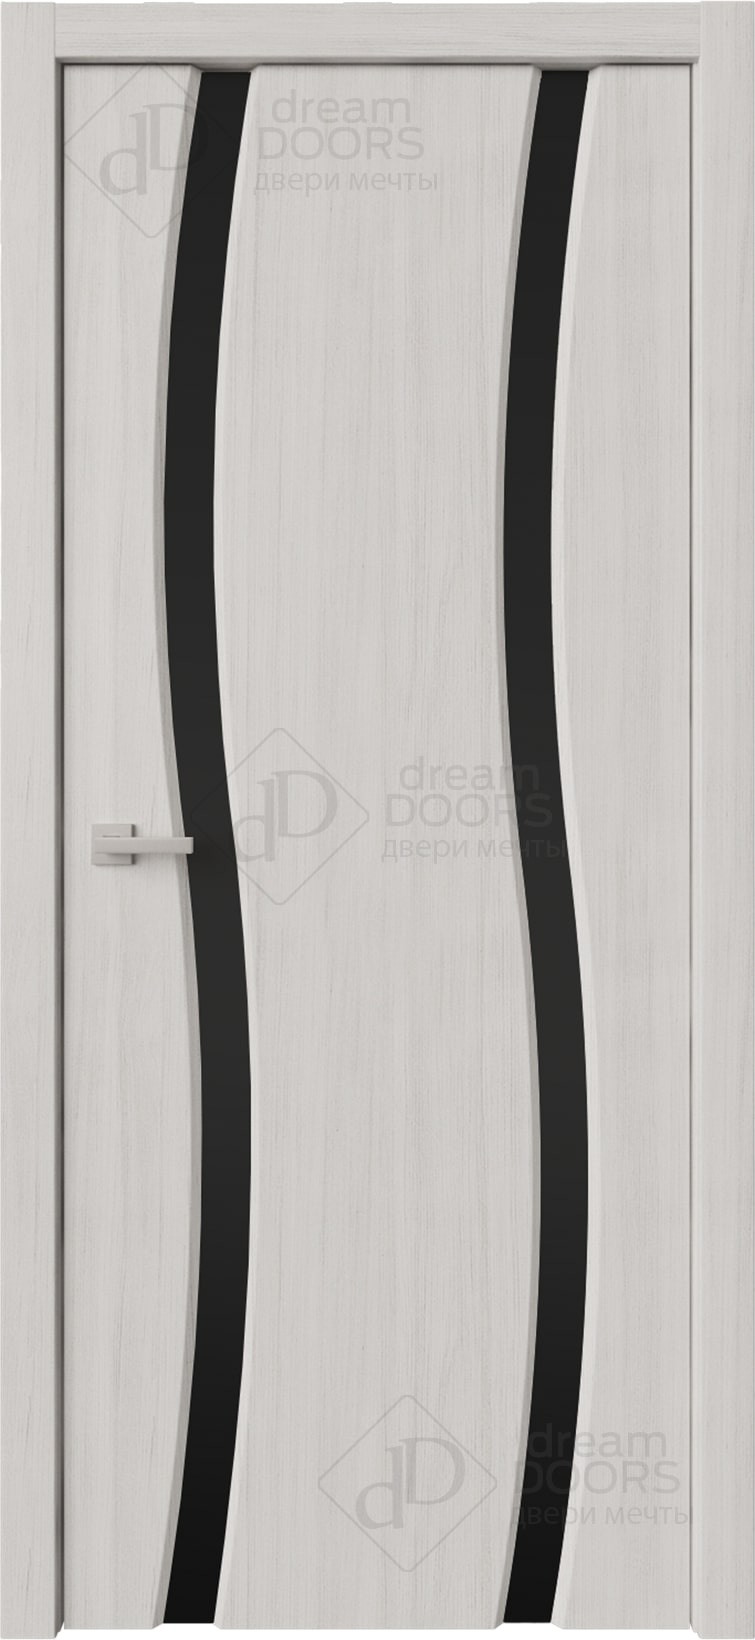 Dream Doors Межкомнатная дверь Сириус 2 Волна узкое ДО, арт. 20084 - фото №7